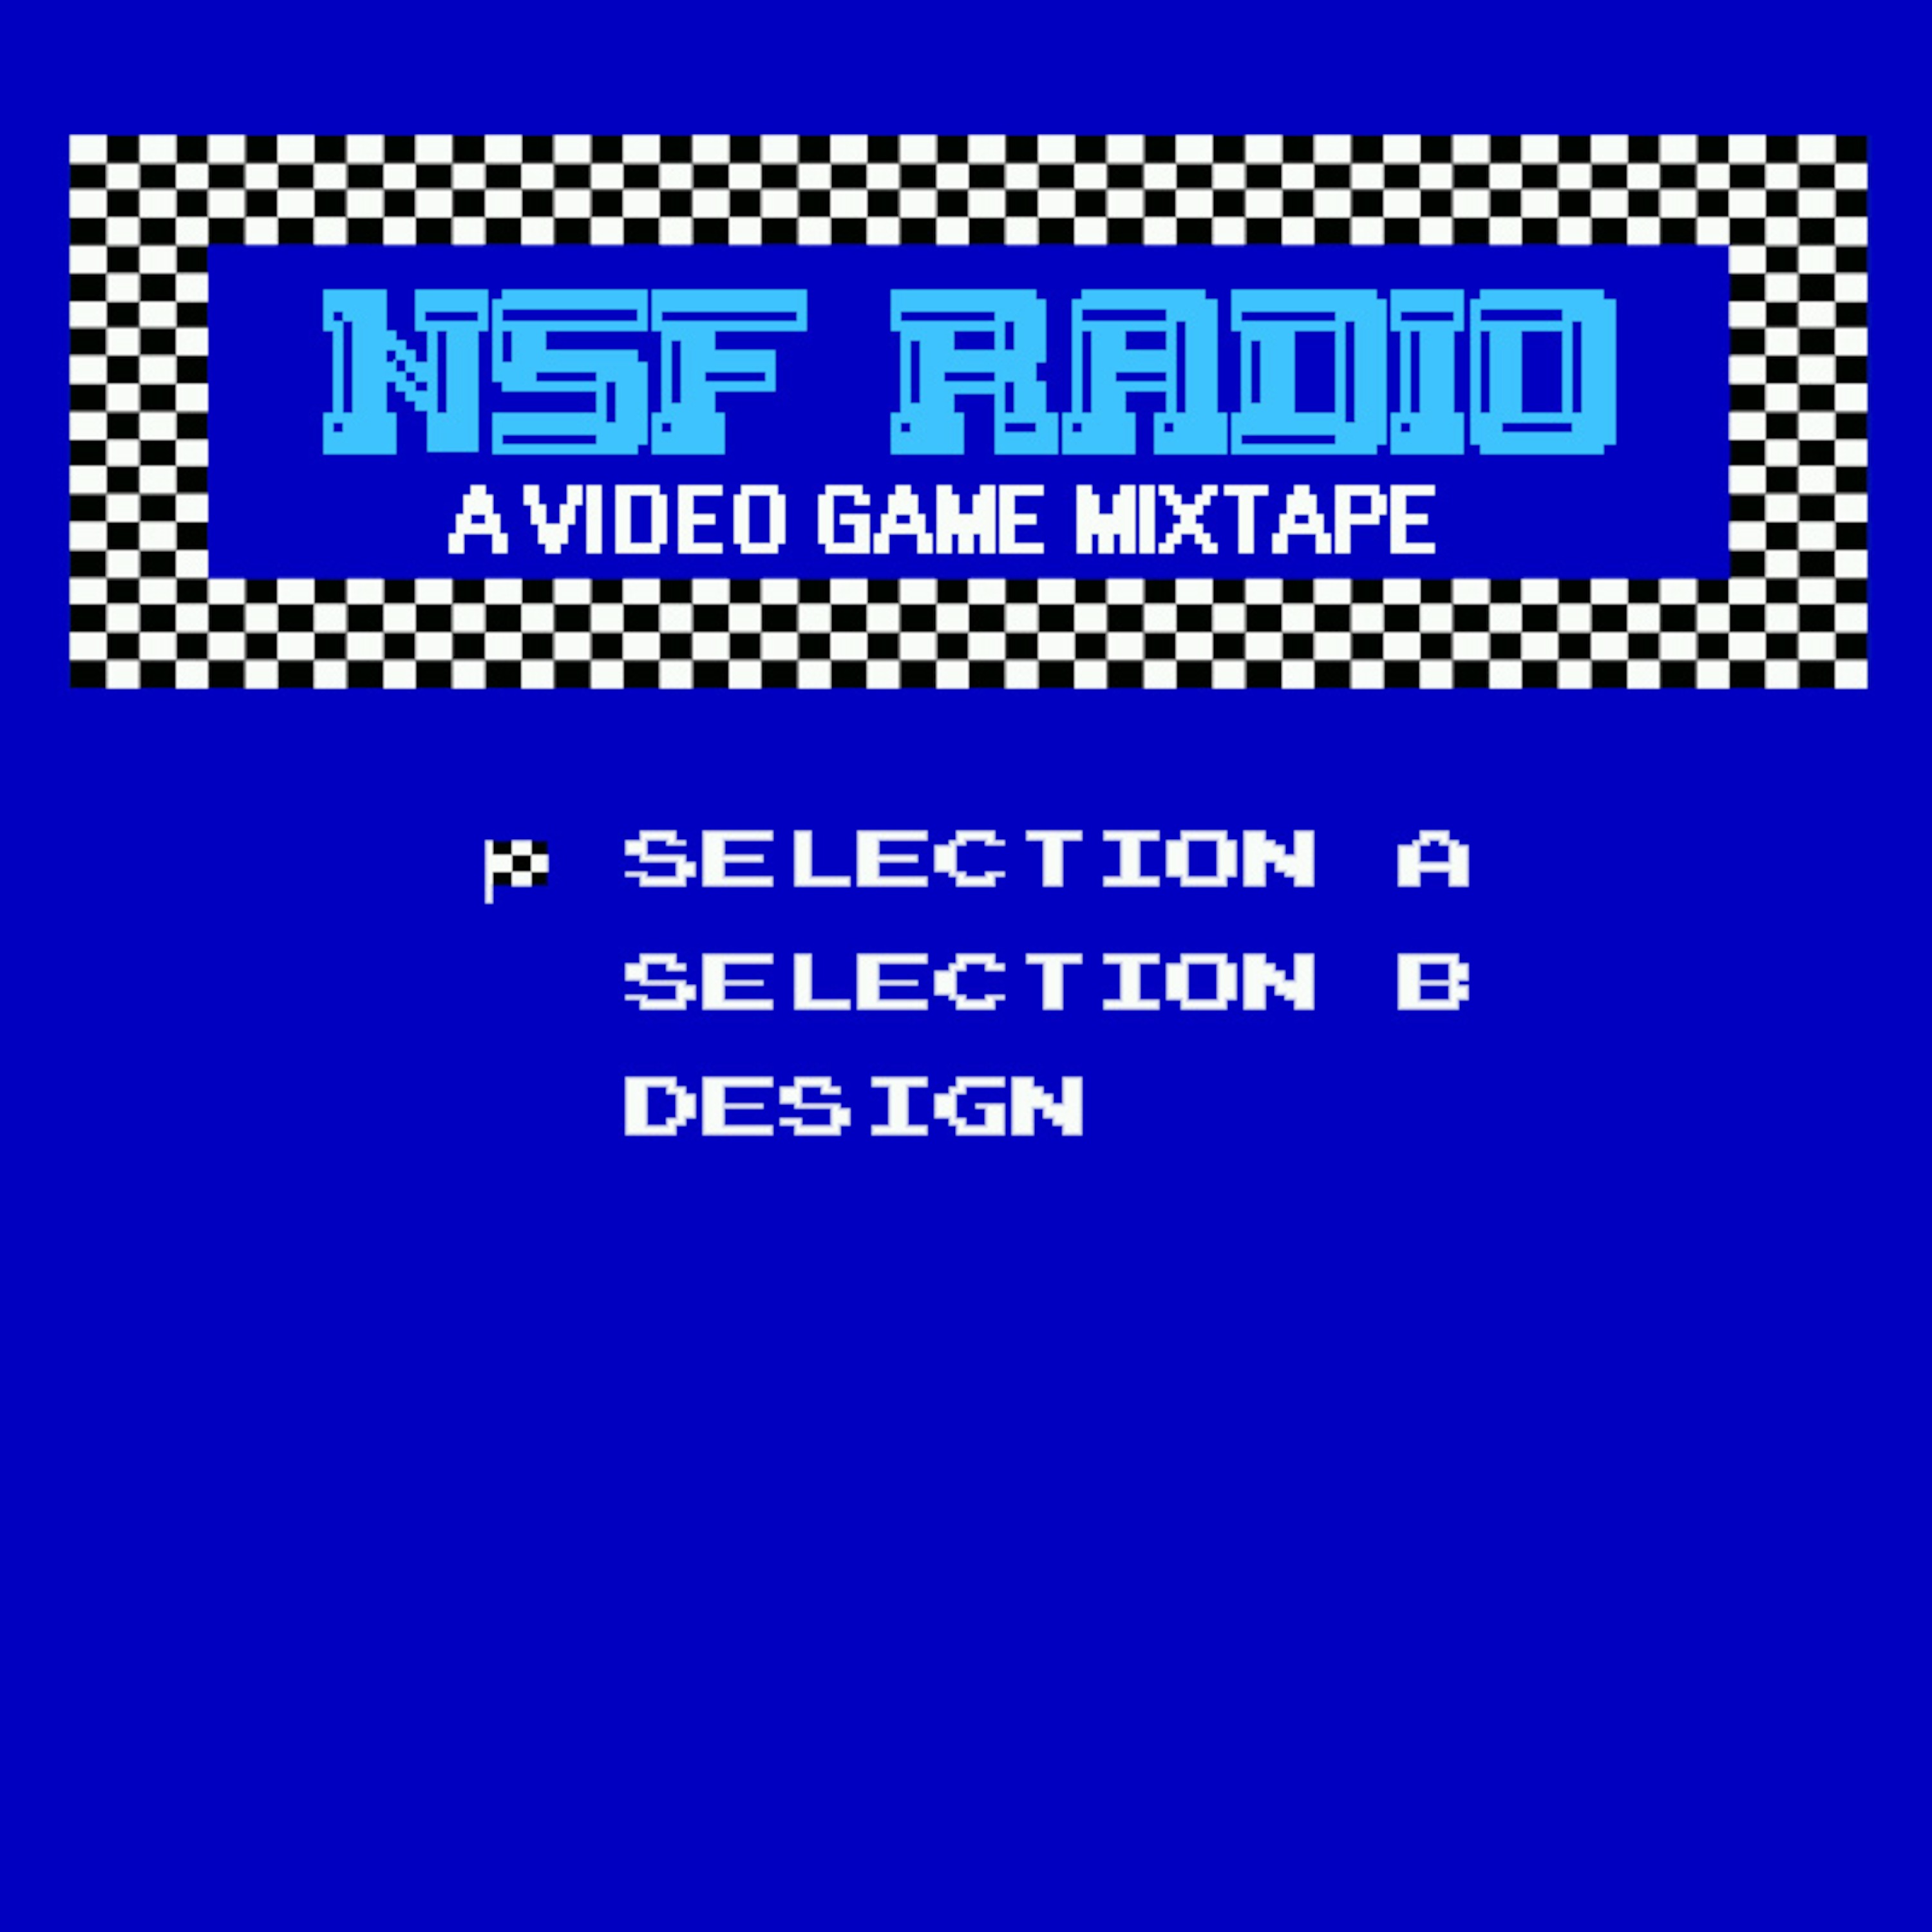 NSFradio's Podcast